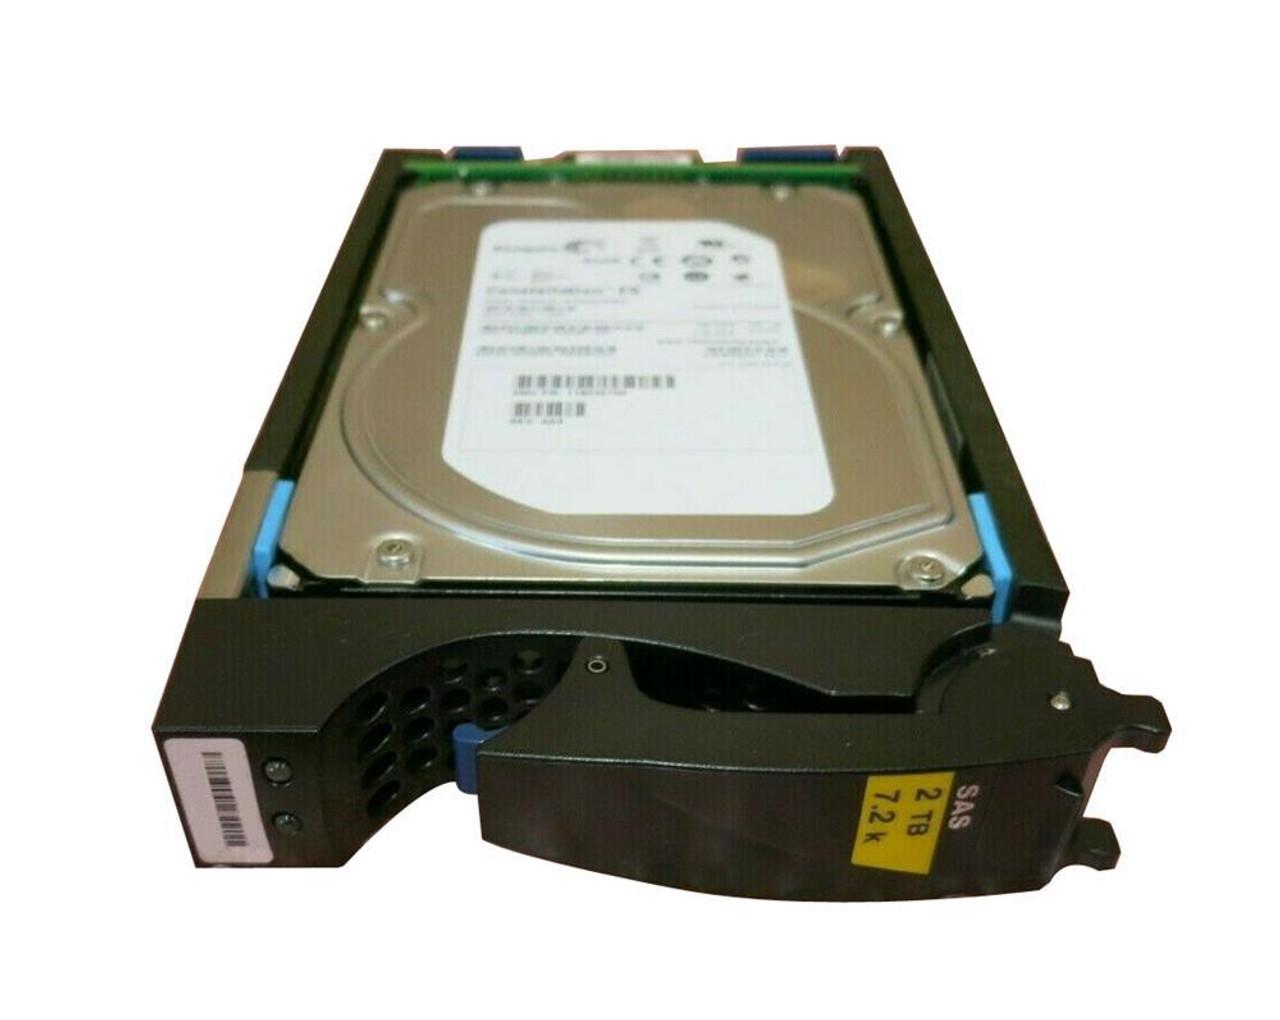 D3N-VS07-2000U EMC 2TB 7200RPM SAS 12Gbps Nearline 128MB Cache 3.5-inch Internal Hard Drive (15-Pack) Upgrade for Unity Hybrid Storage System